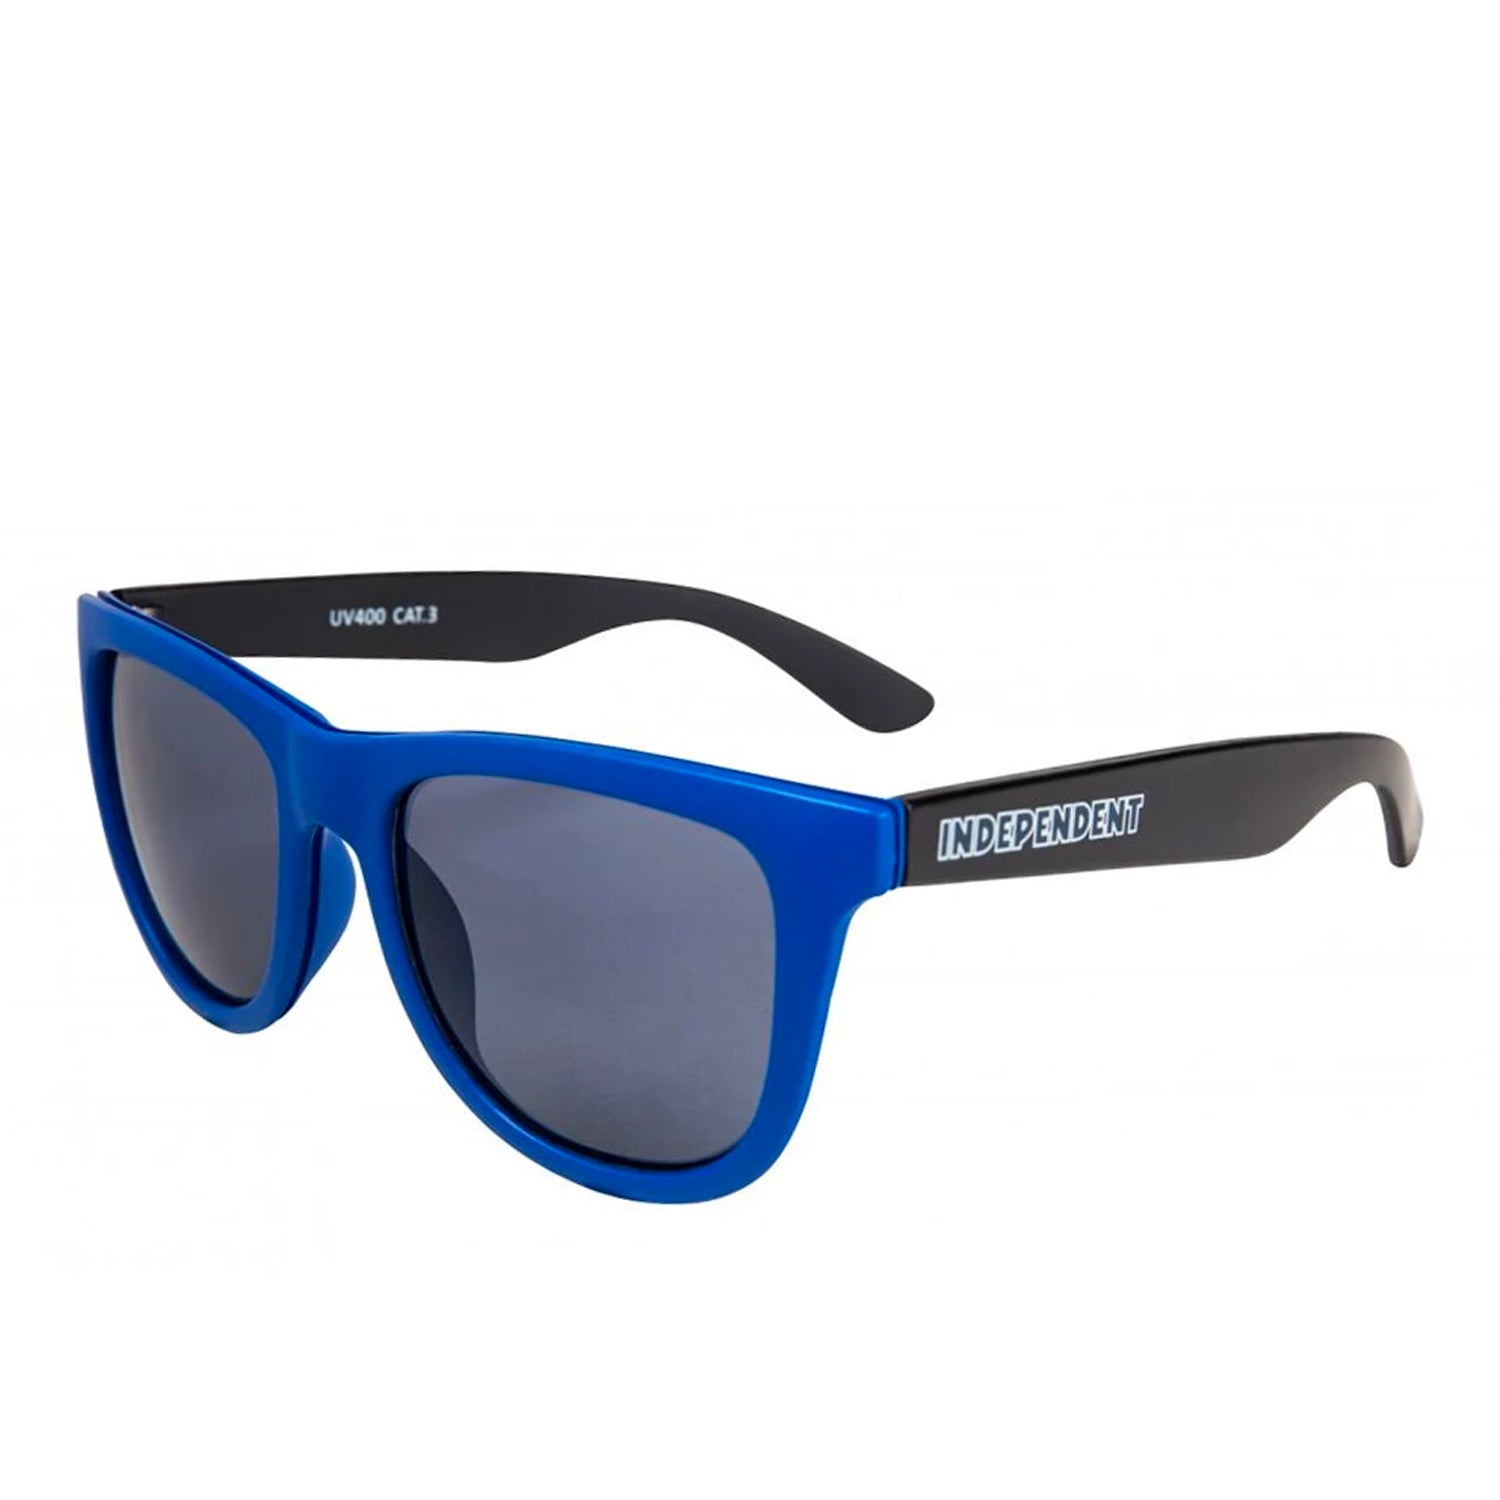 Independent BC Primary Sunglasses - Black / Blue - Prime Delux Store